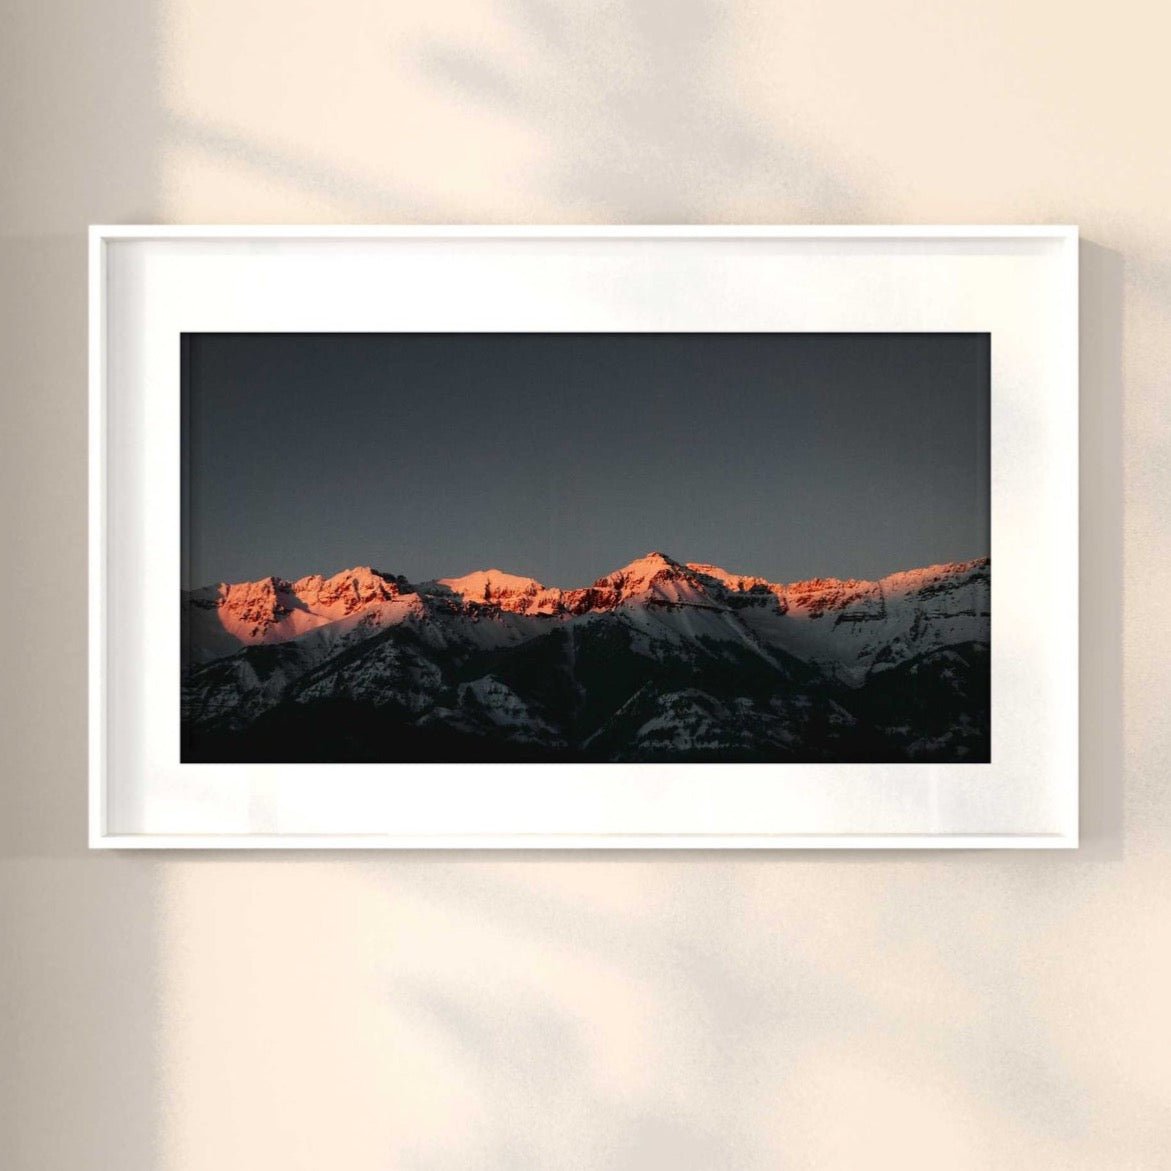 CAROL M. HIGHSMITH - Mountain Sunset View